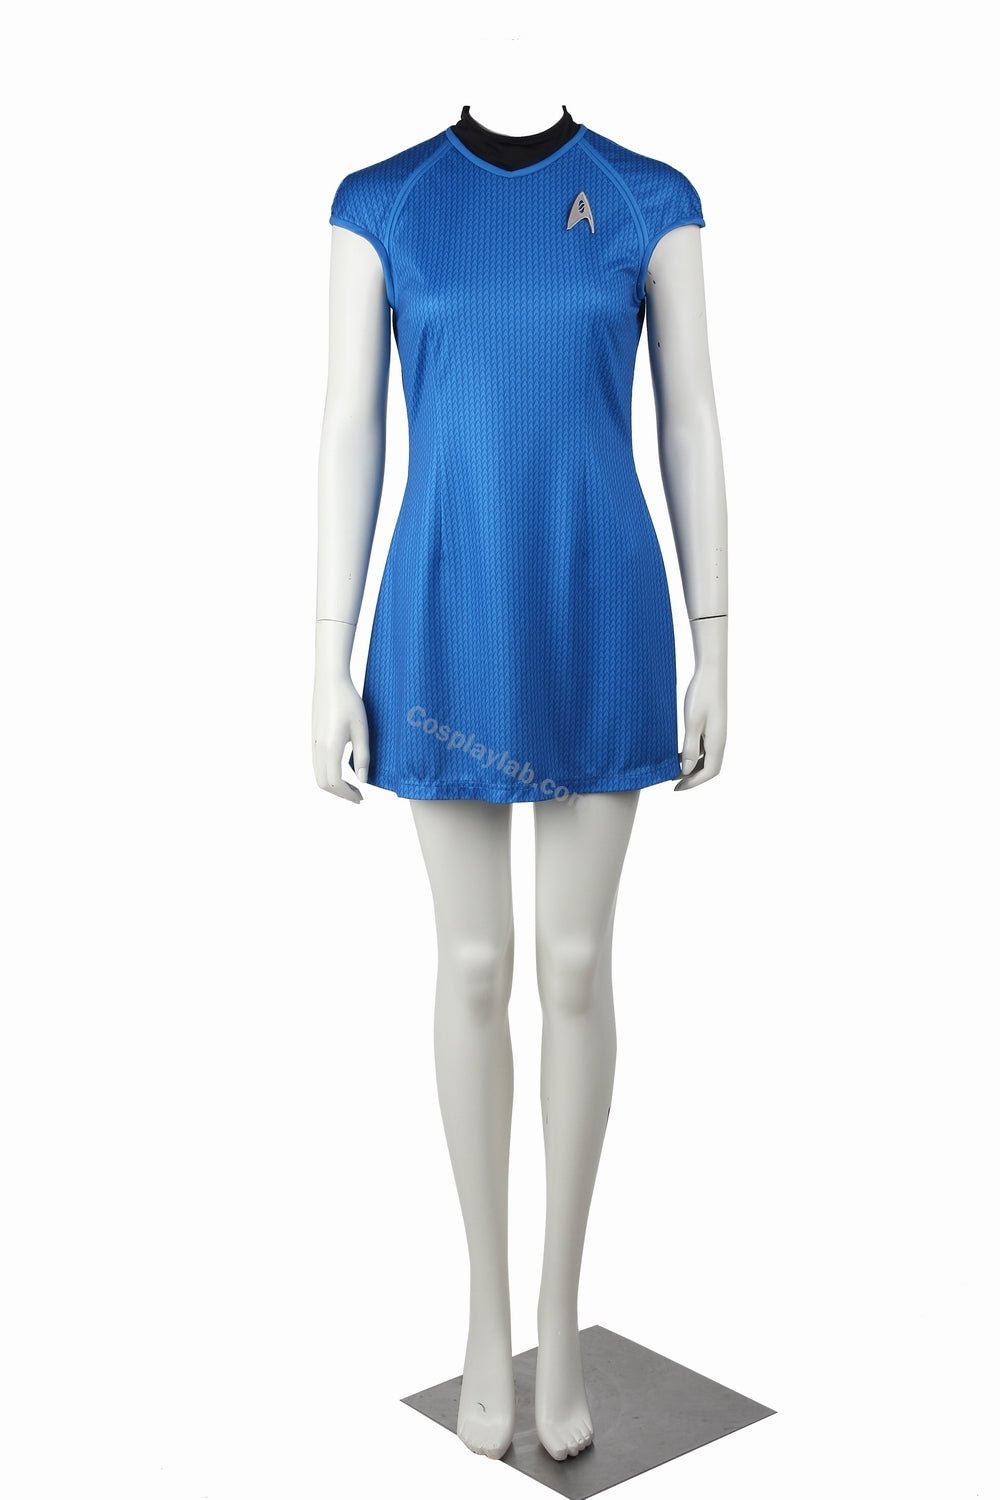 Star Trek blue short Girl Woman Cosplay T-Shirt Costume Uniform